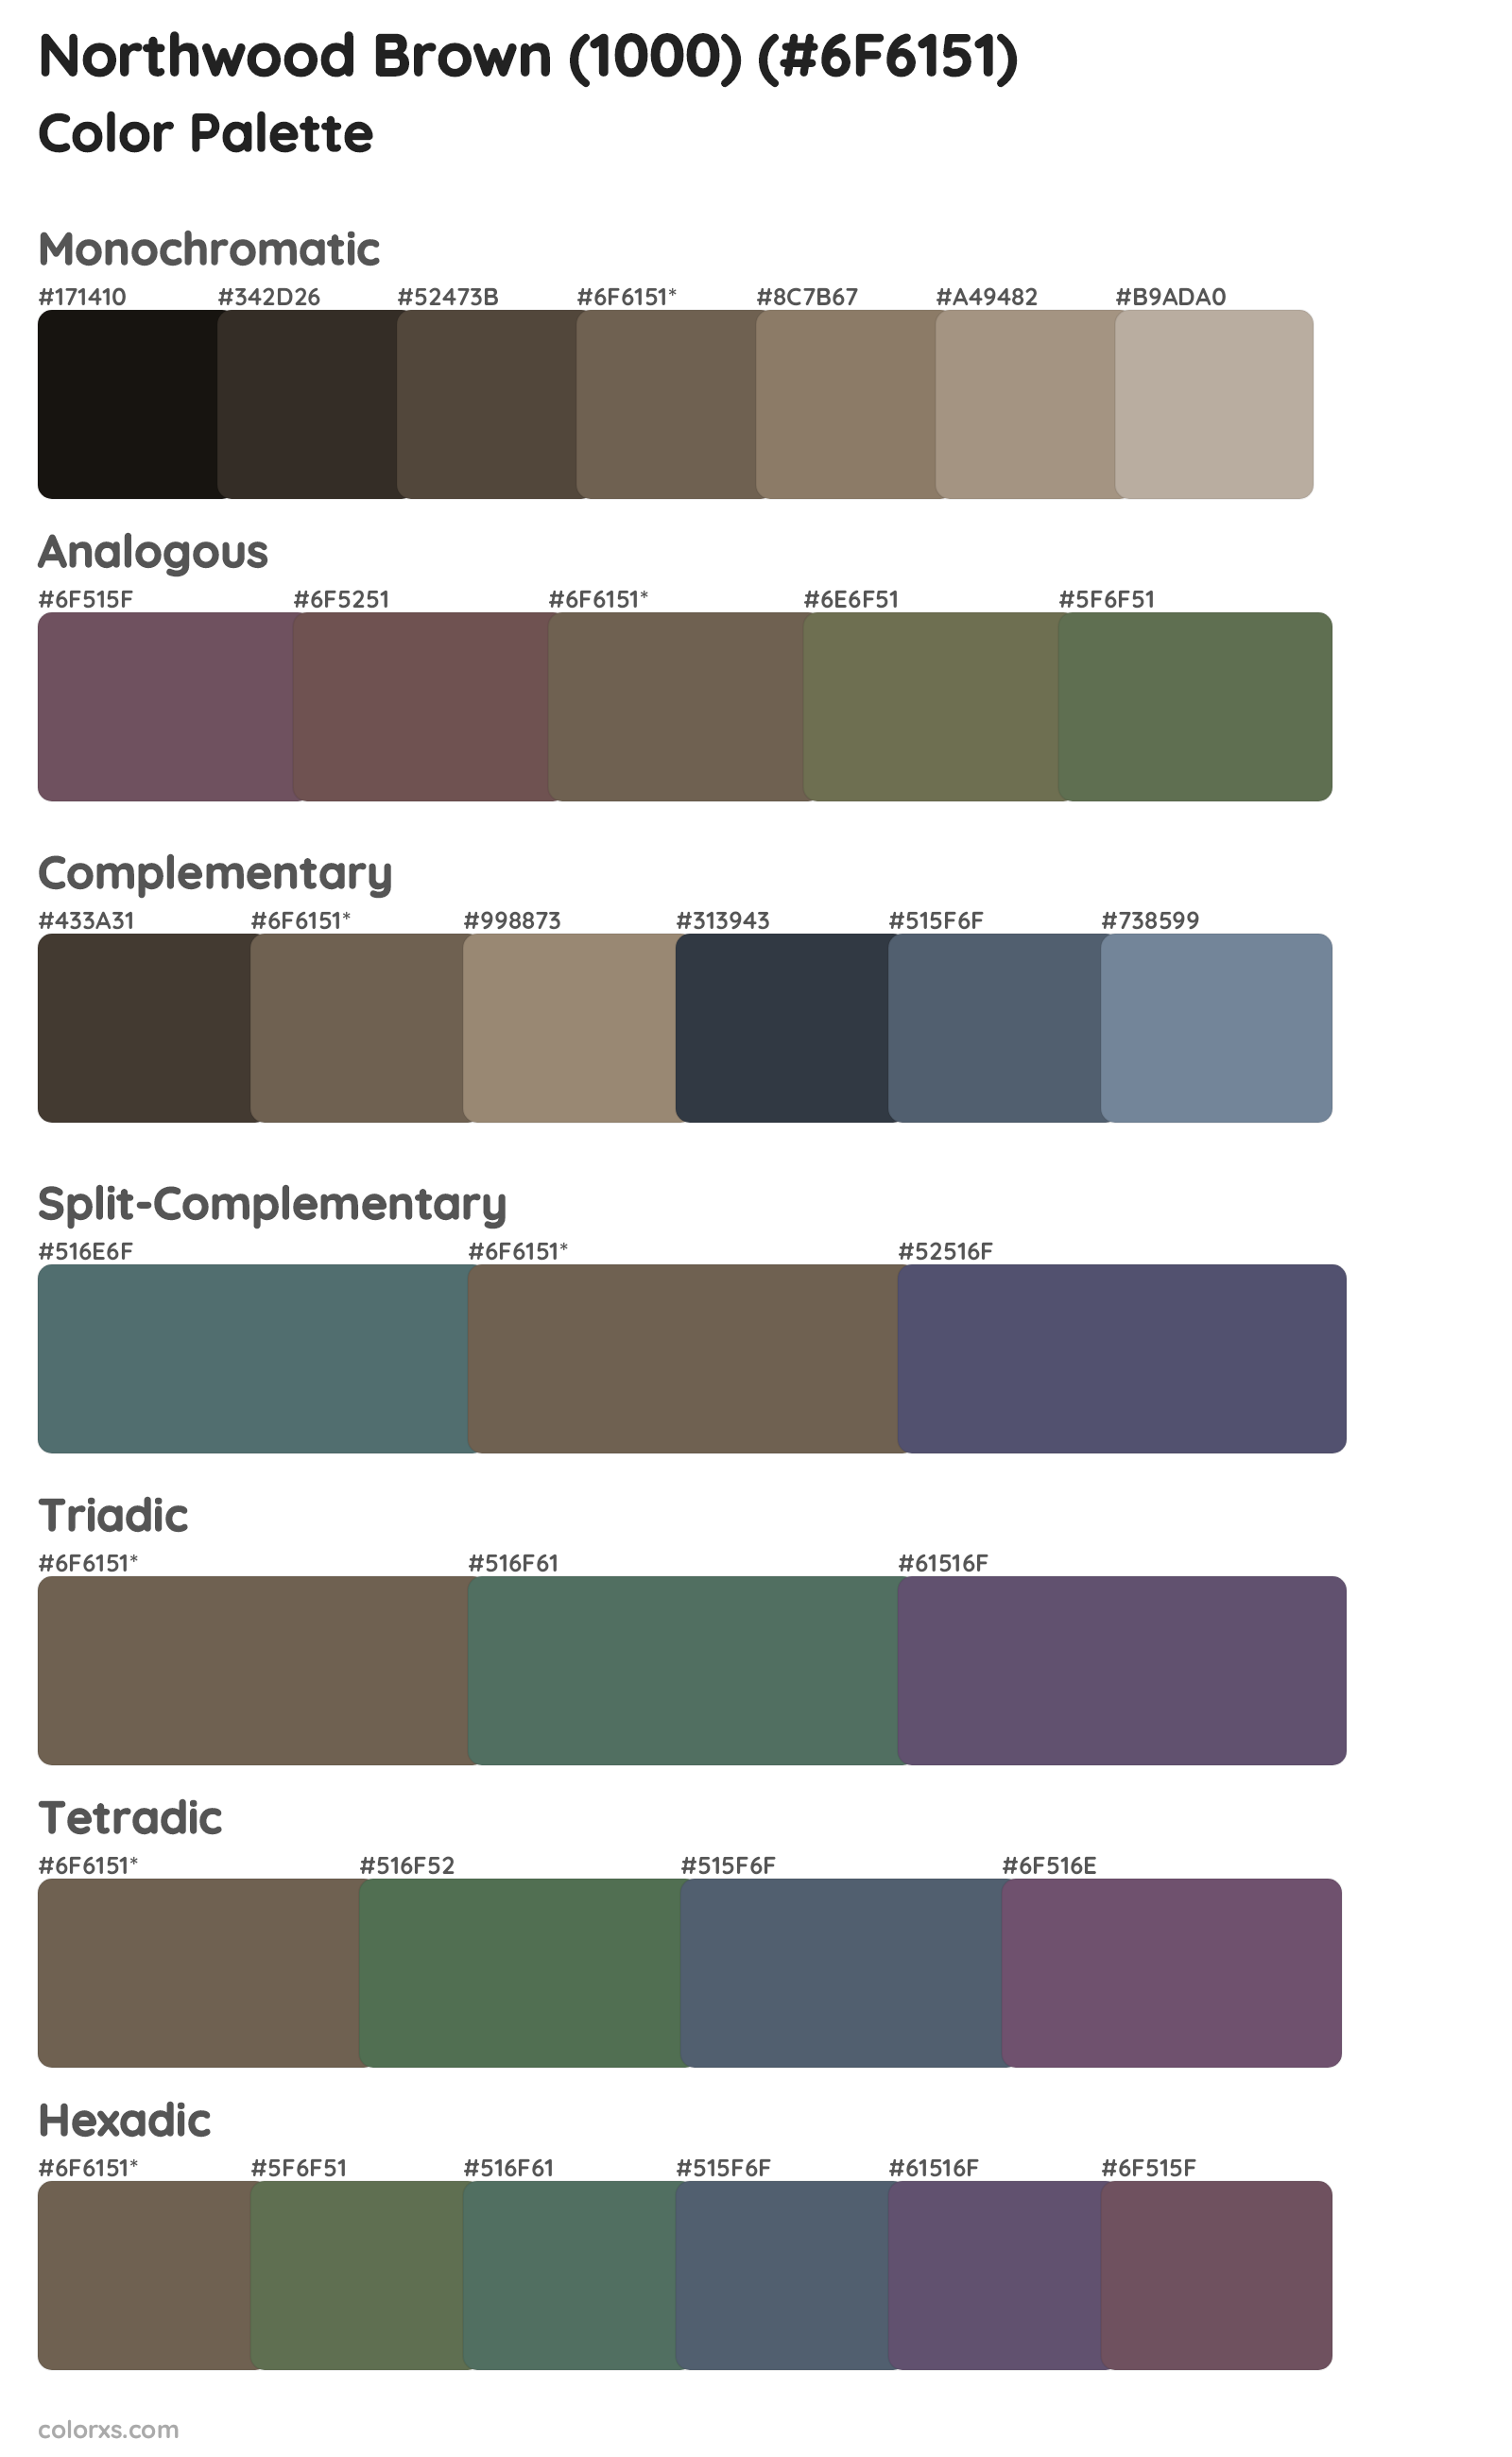 Northwood Brown (1000) Color Scheme Palettes